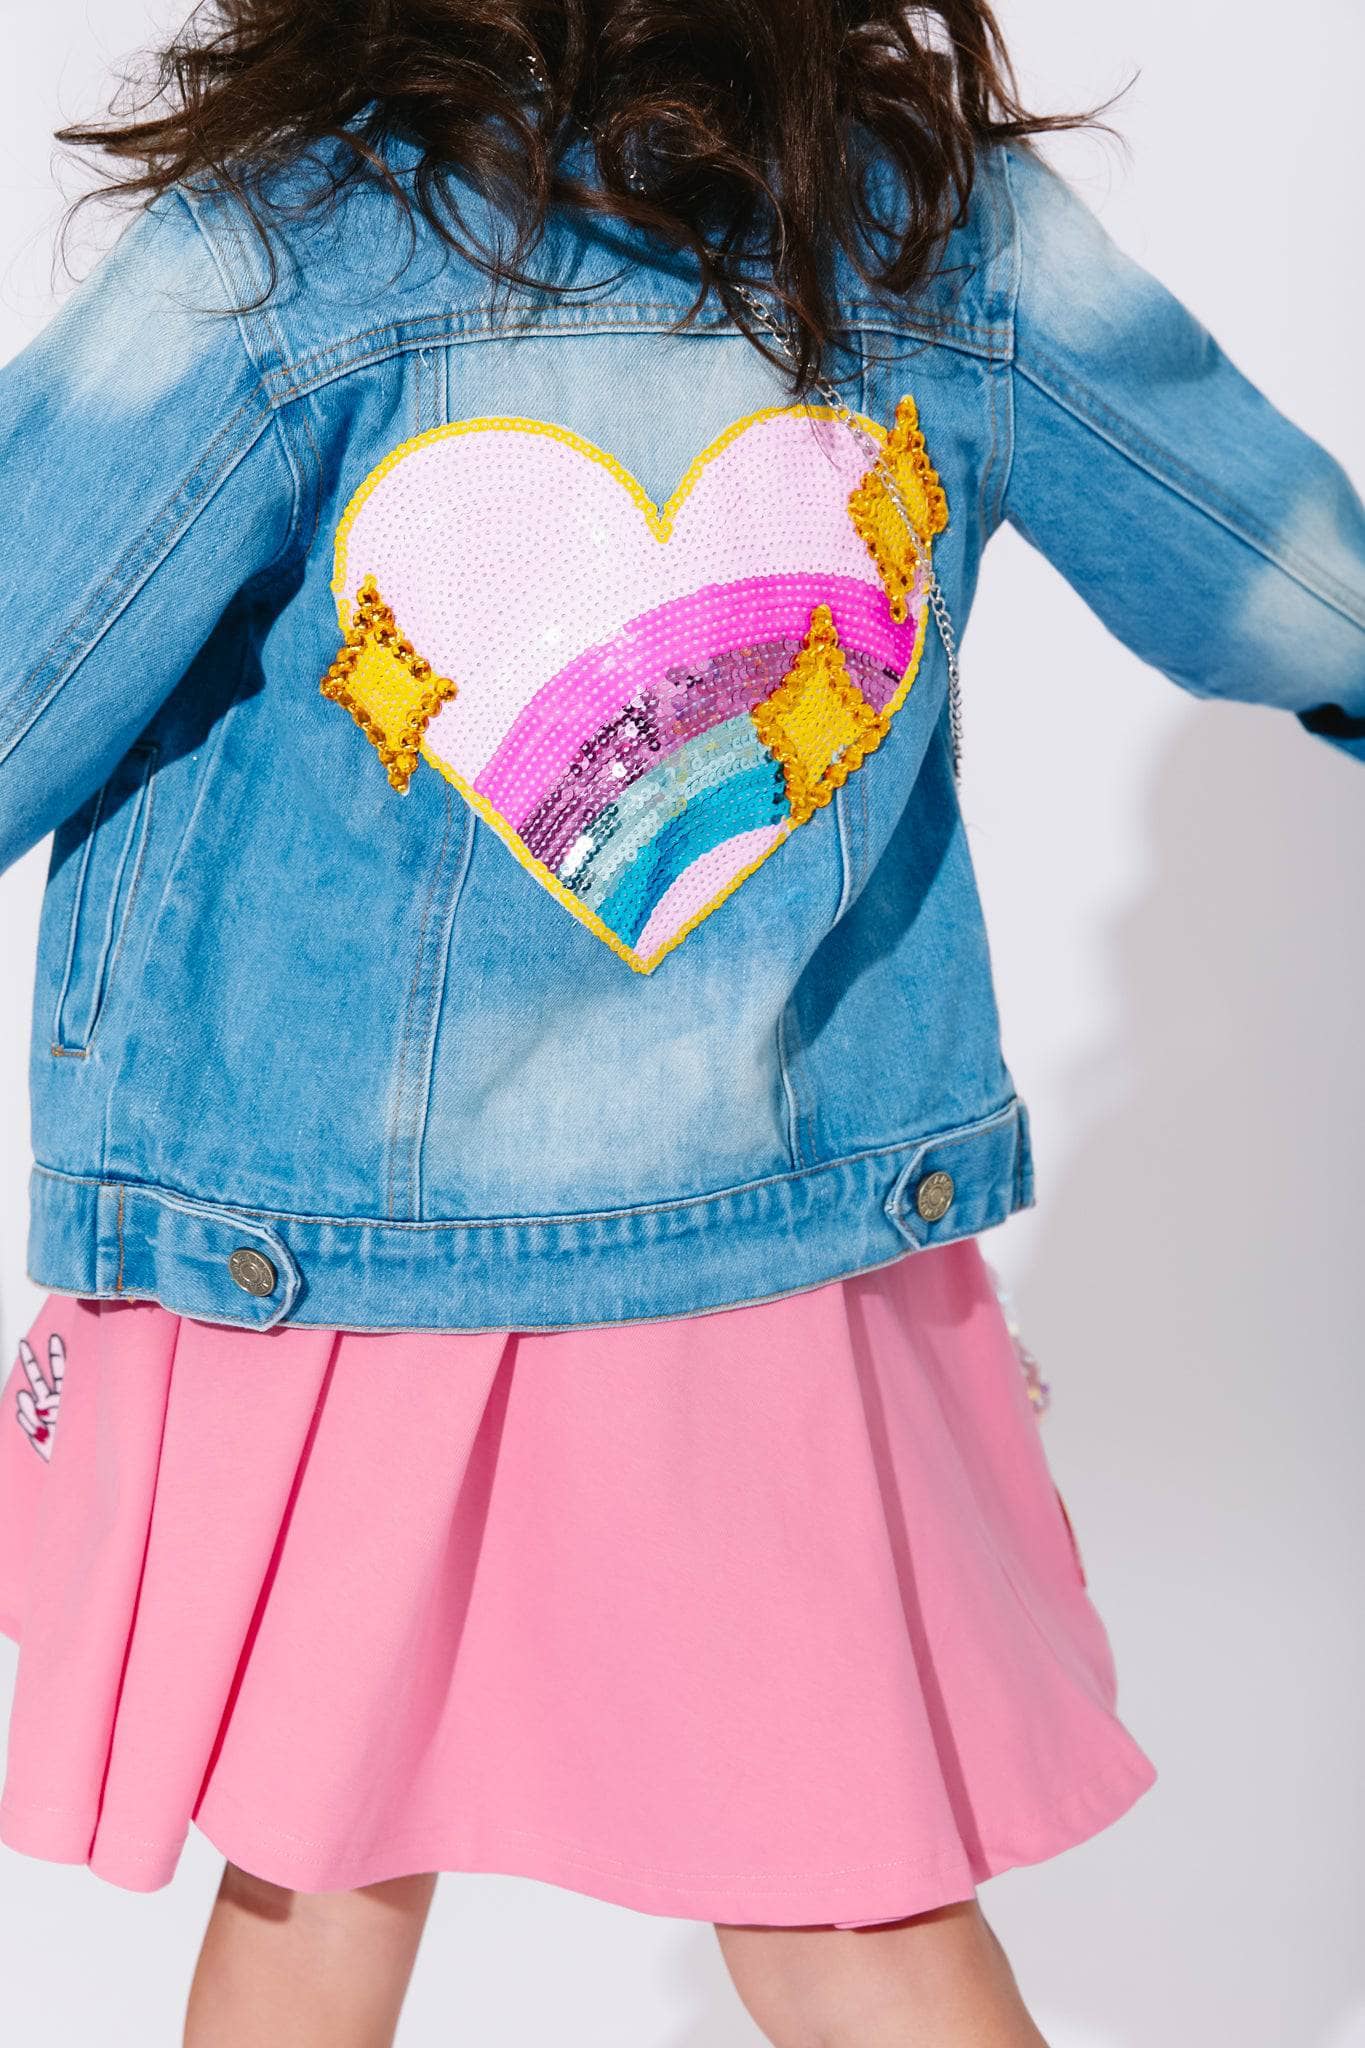 Sparkle Rainbow Heart Denim Jacket